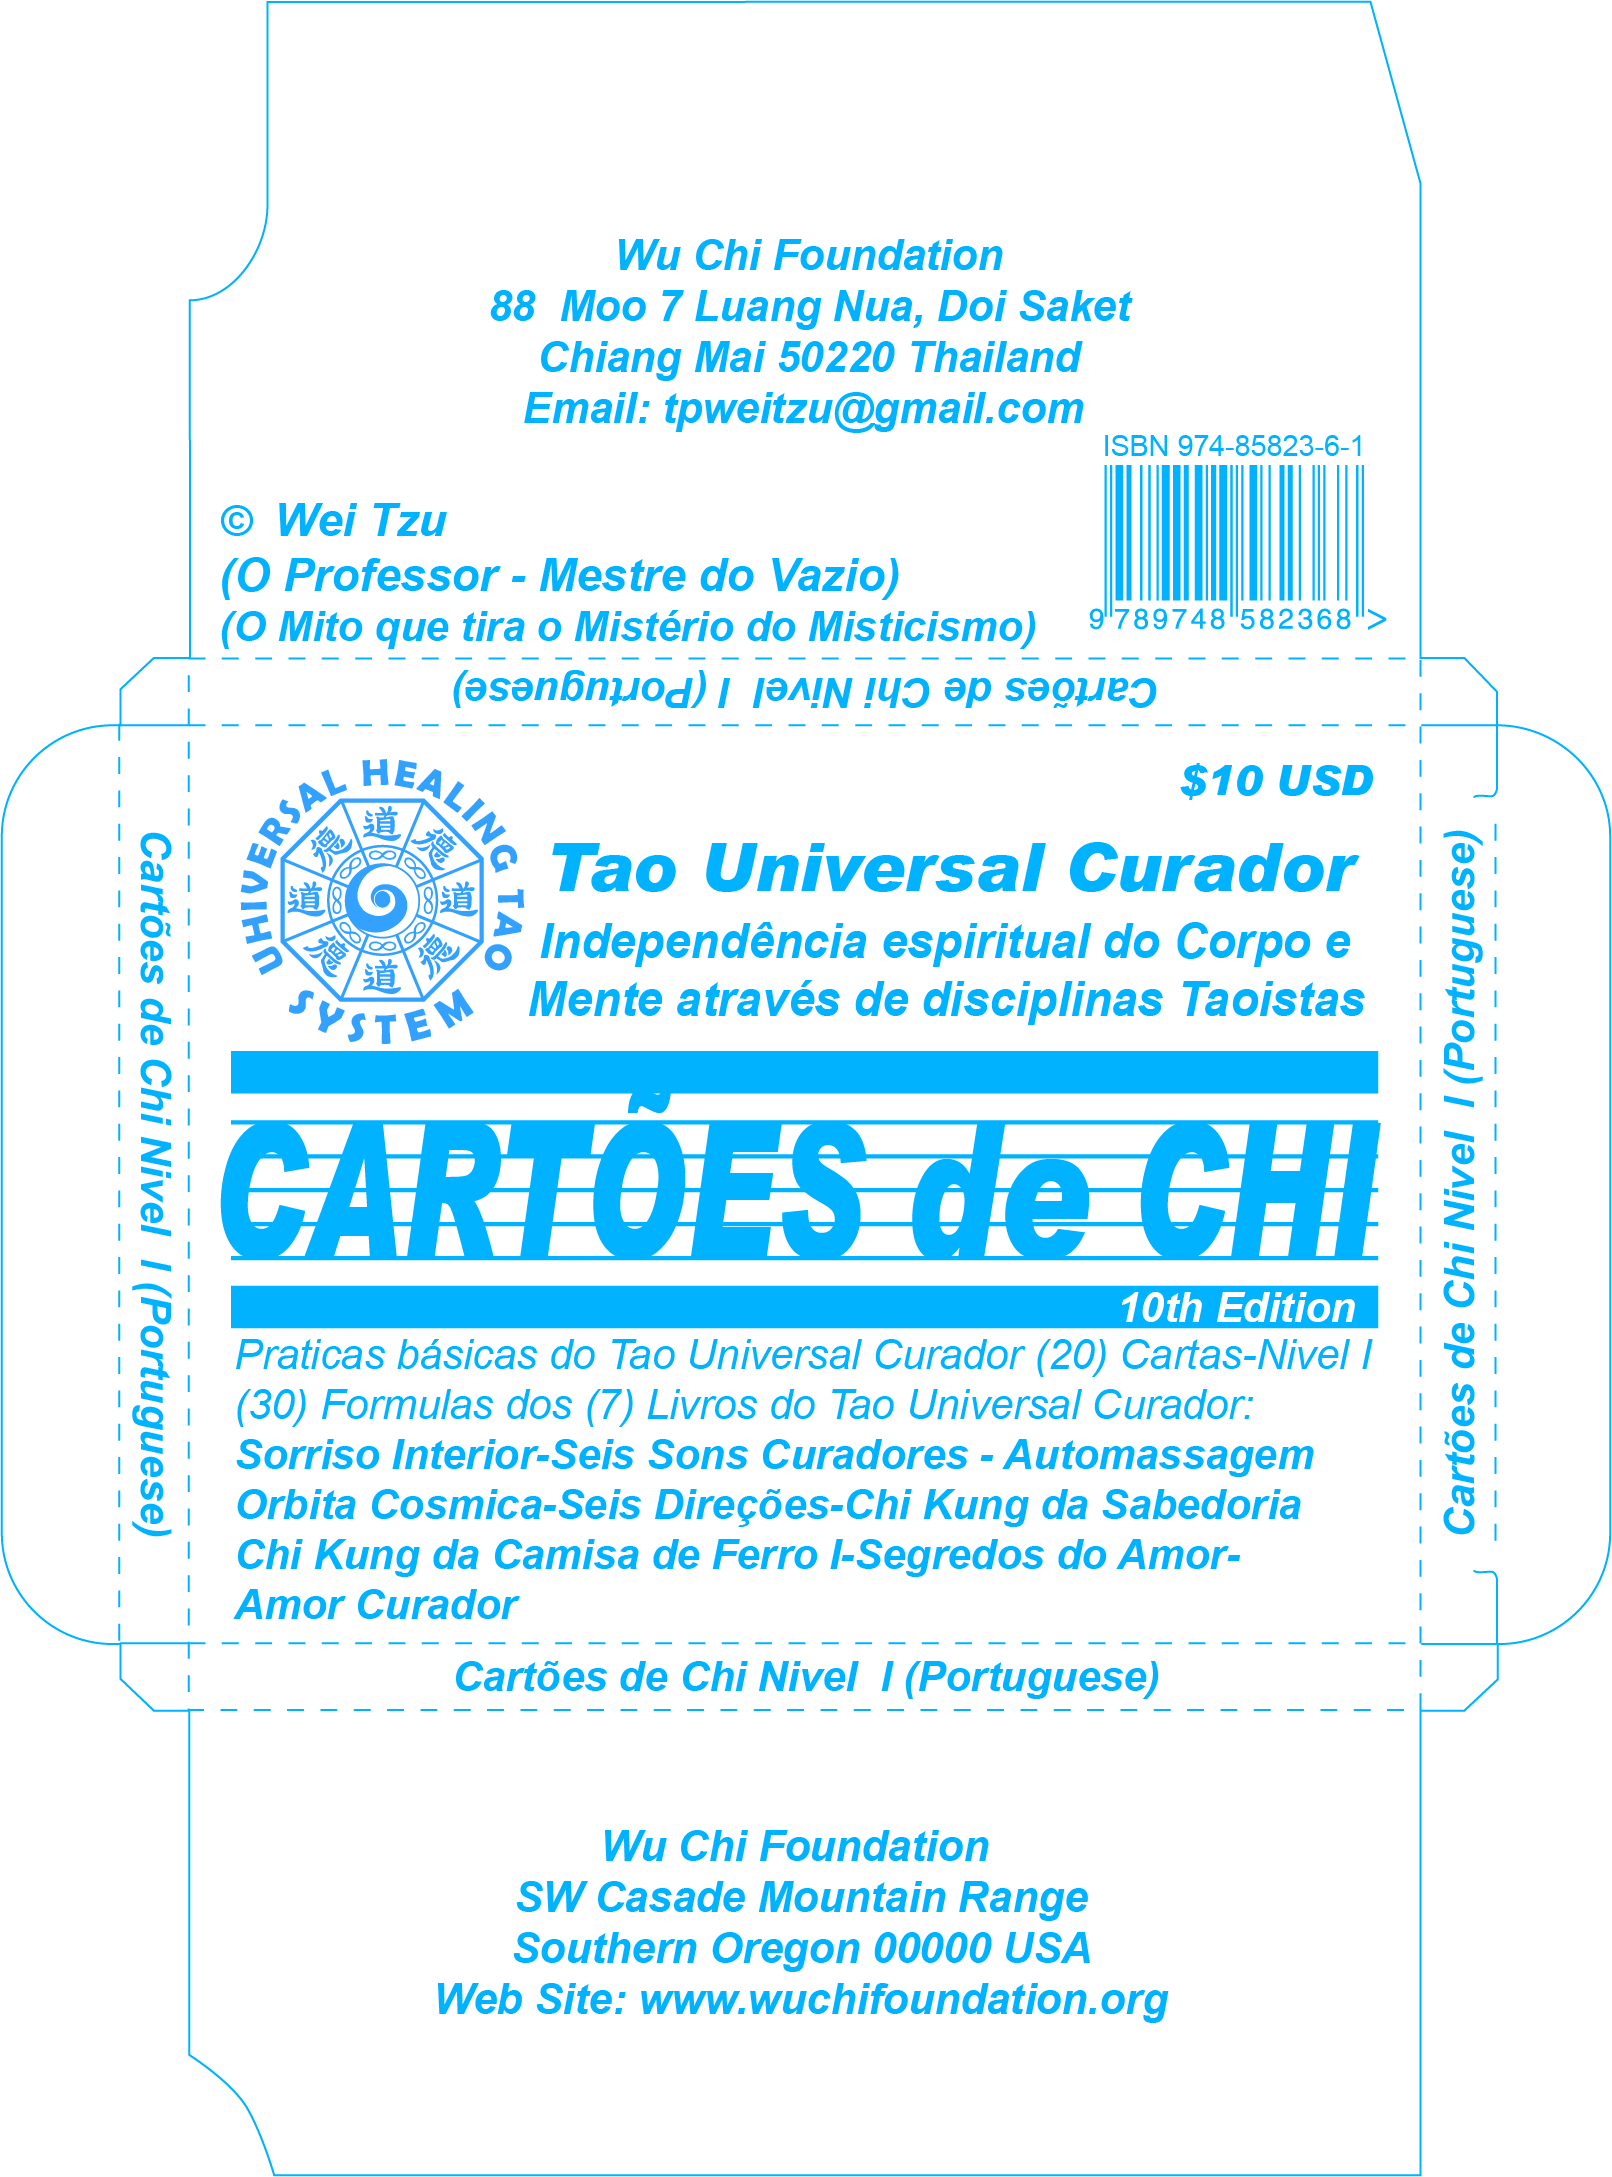 Portuguese Chi Cards - Level I (10 Edition)